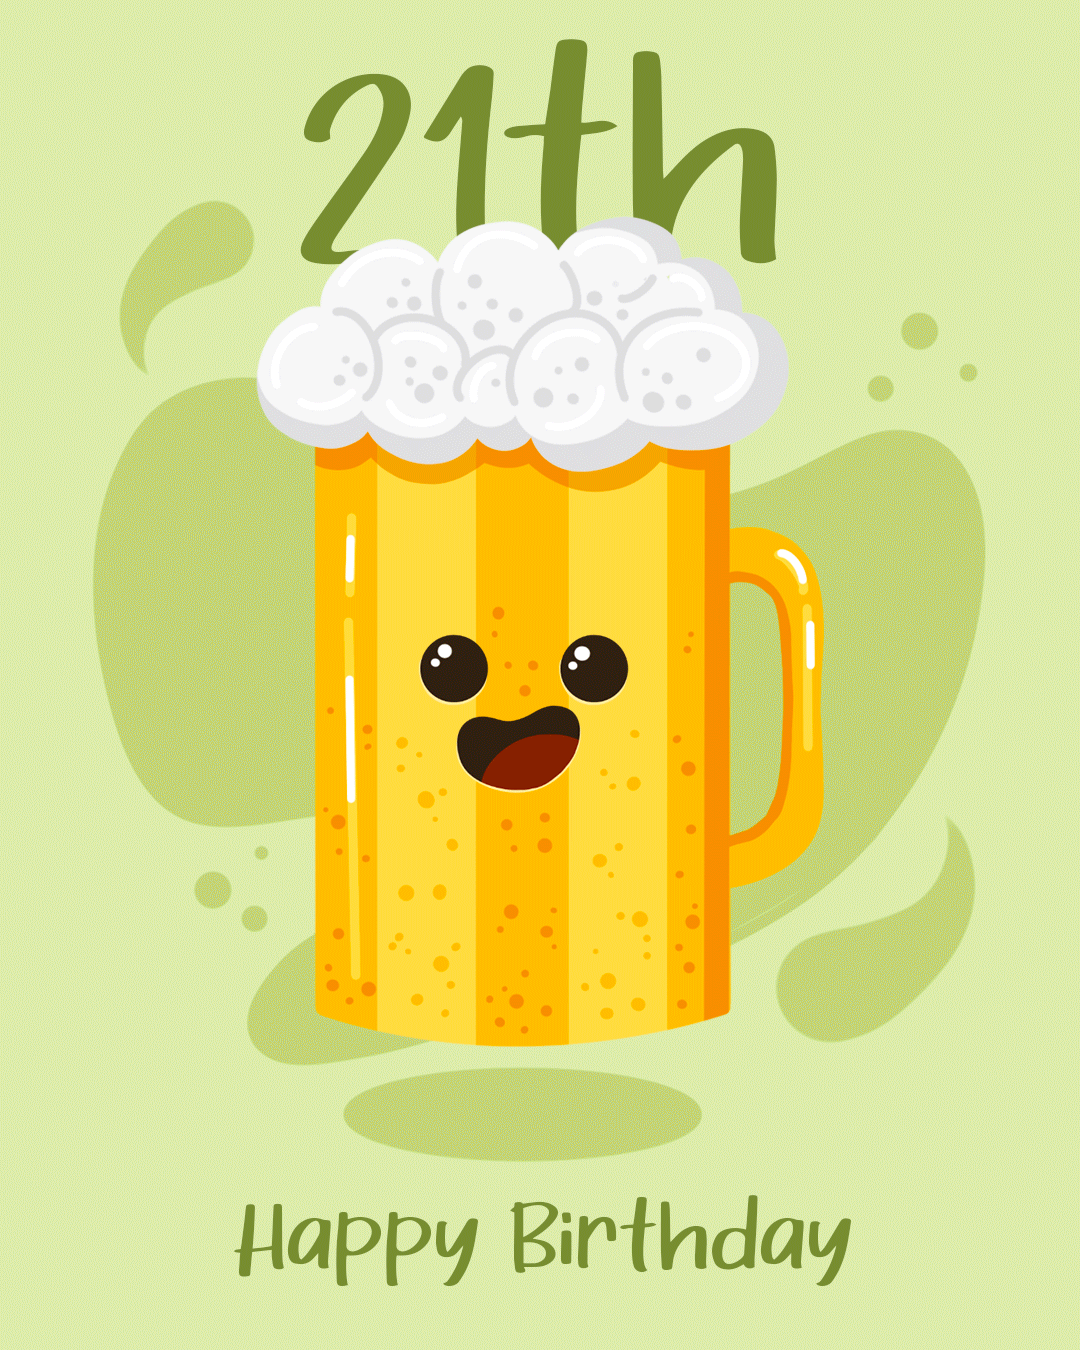 Happy 21st Birthday with Beer - birthdayyou.com